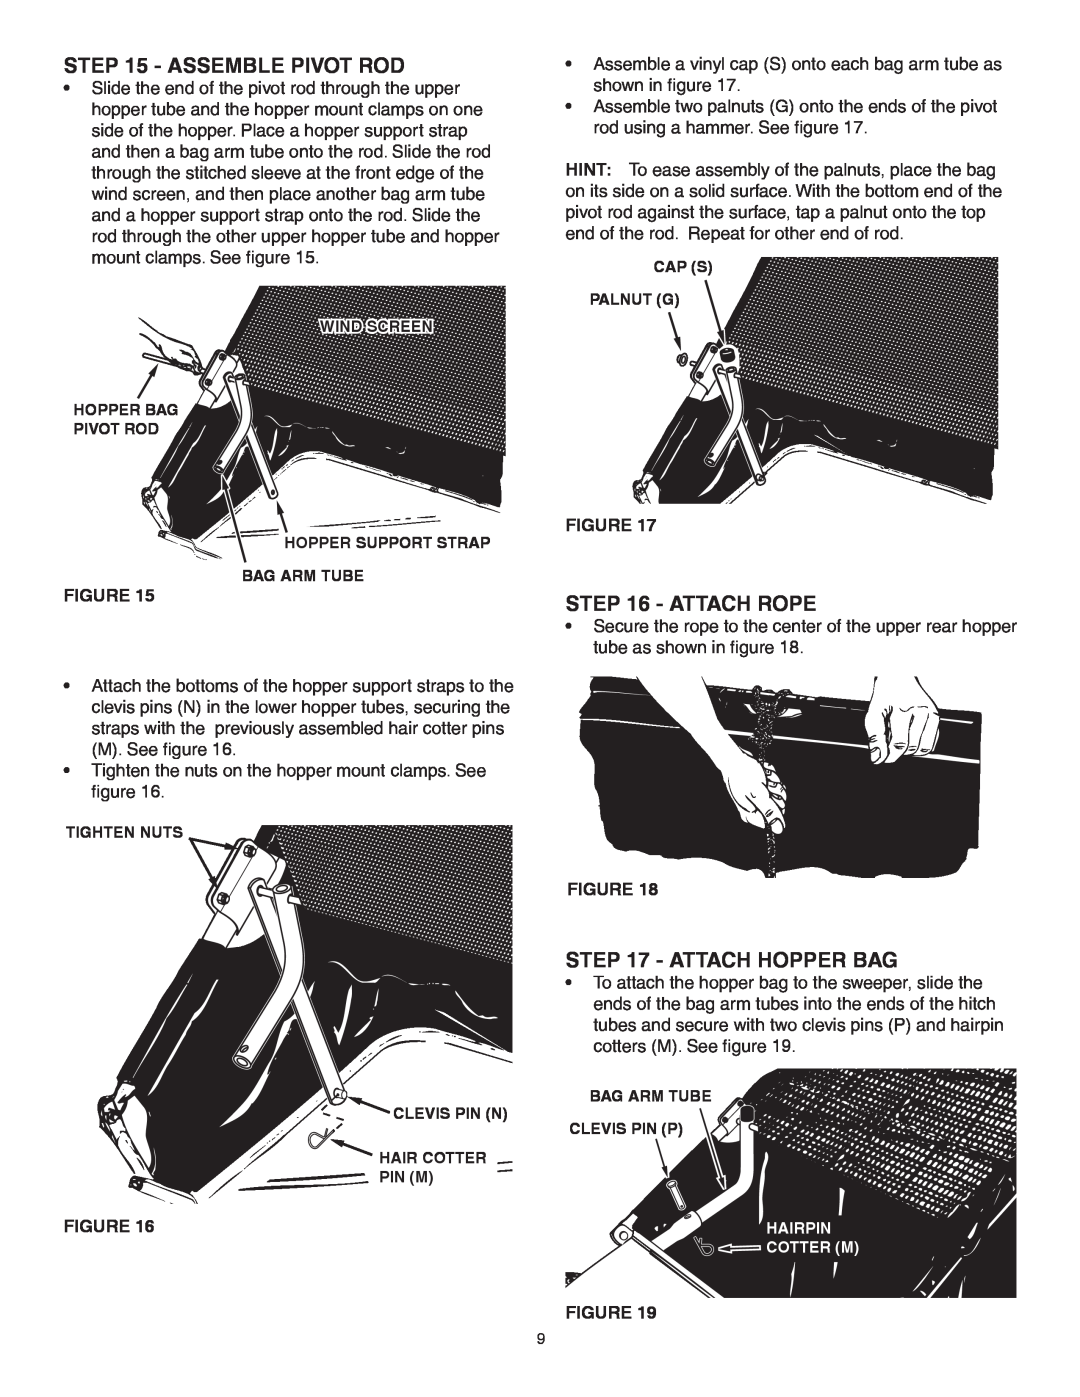 Craftsman 486.24222 owner manual Assemble Pivot Rod, Attach Rope, Attach Hopper Bag 